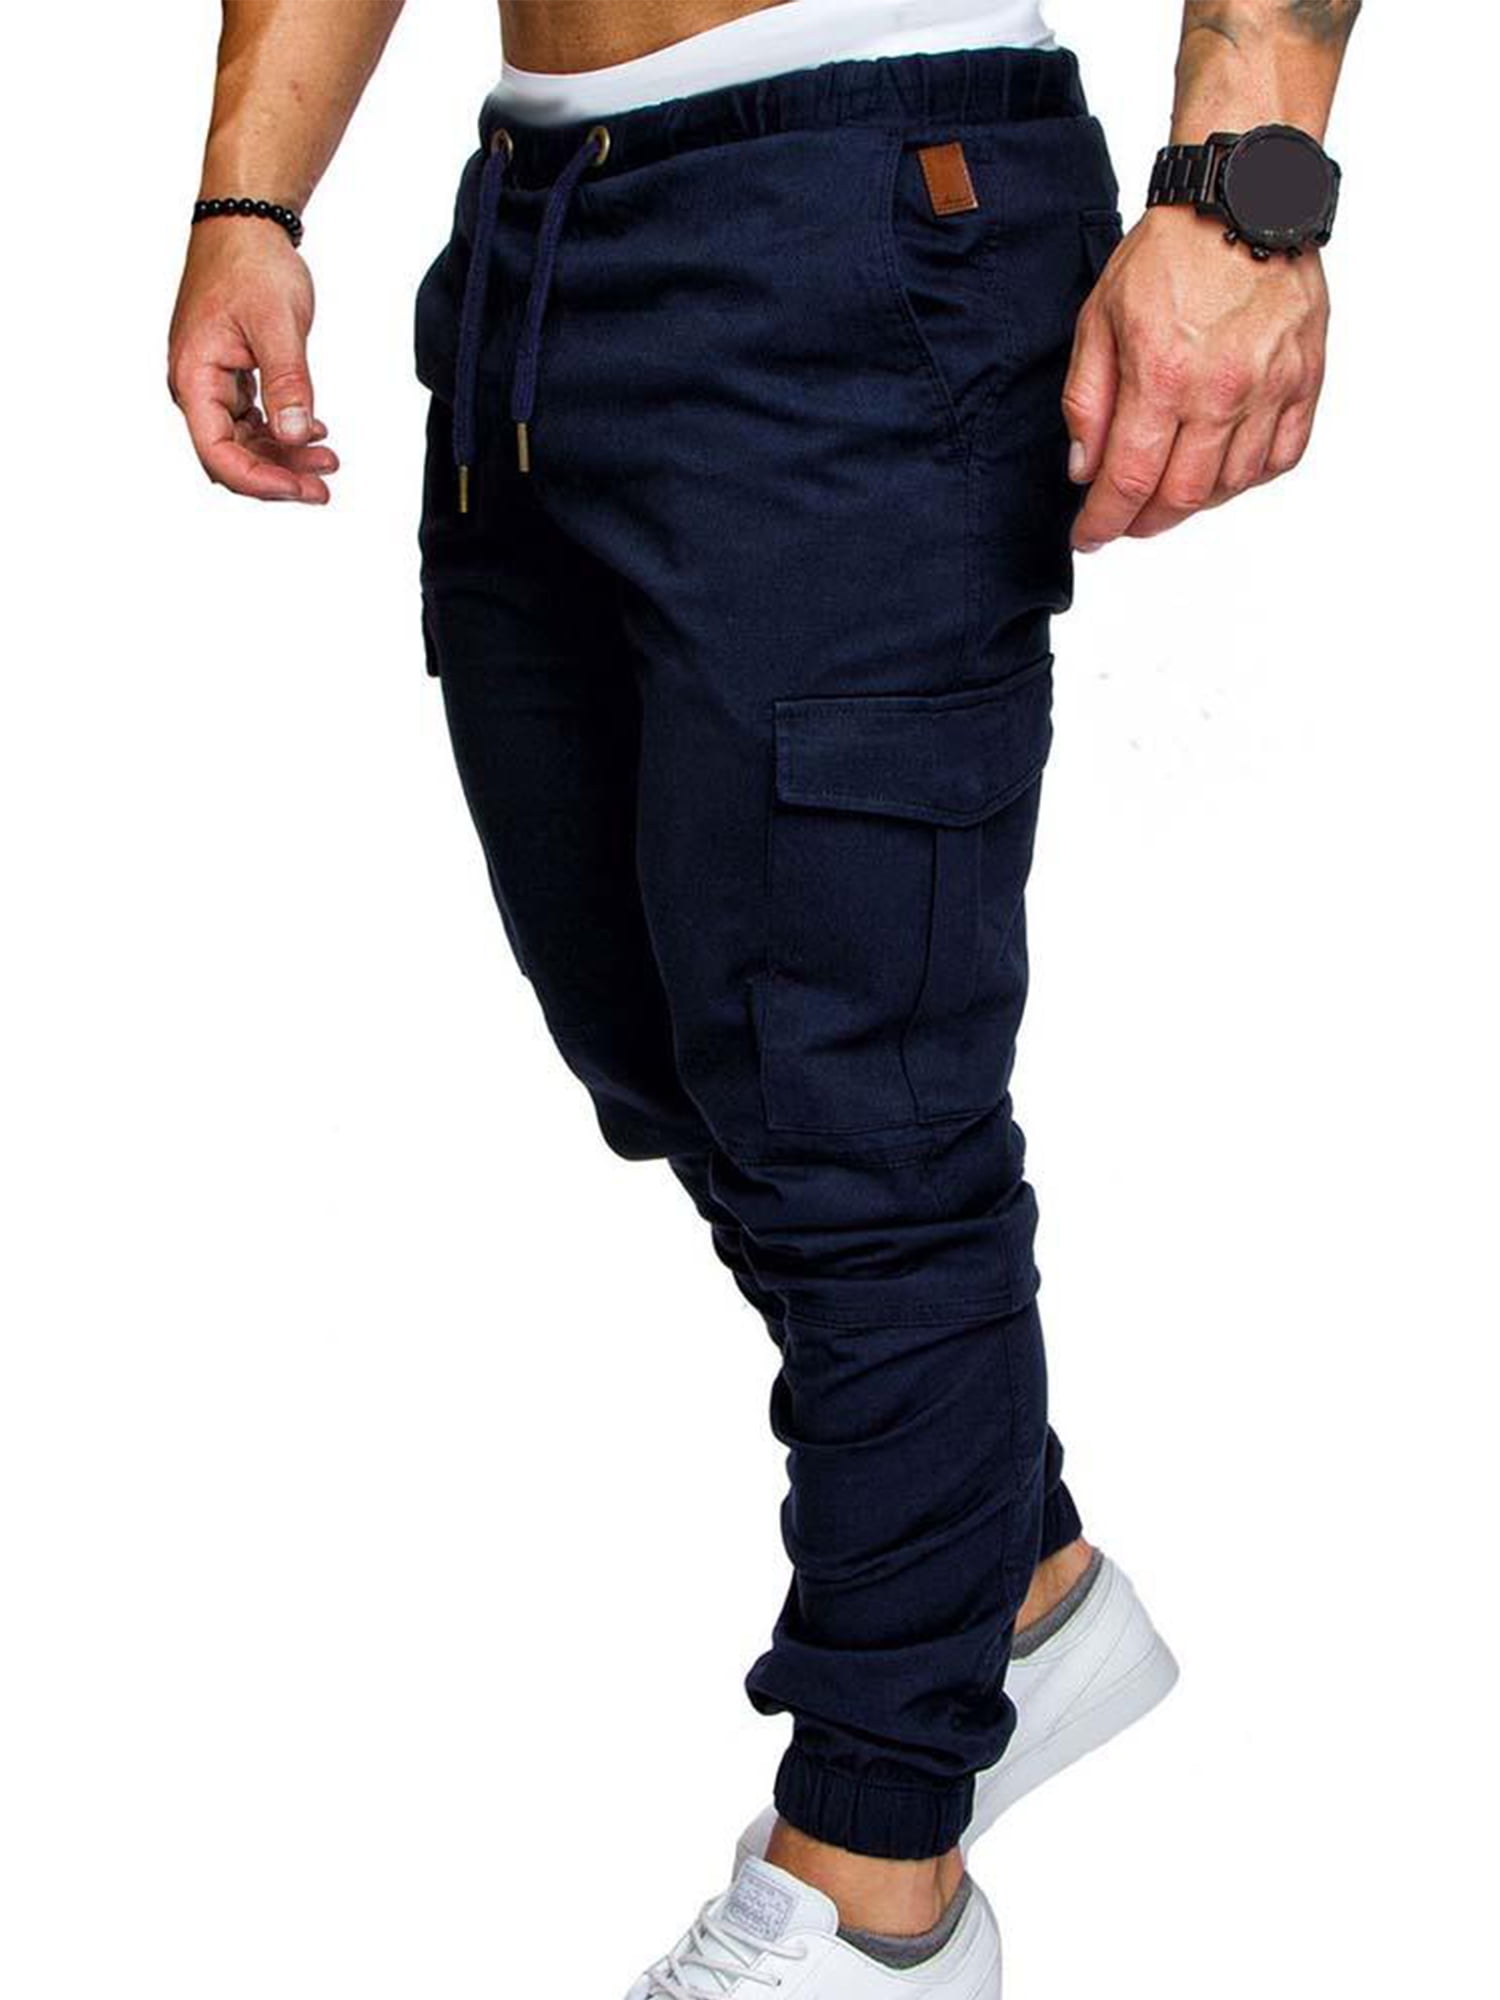 xkwyshop Men's Cargo Pants for Men Slim Fit Casual Jogger Athletic Long  Pant Chino Sweatpants Trousers Navy blue M